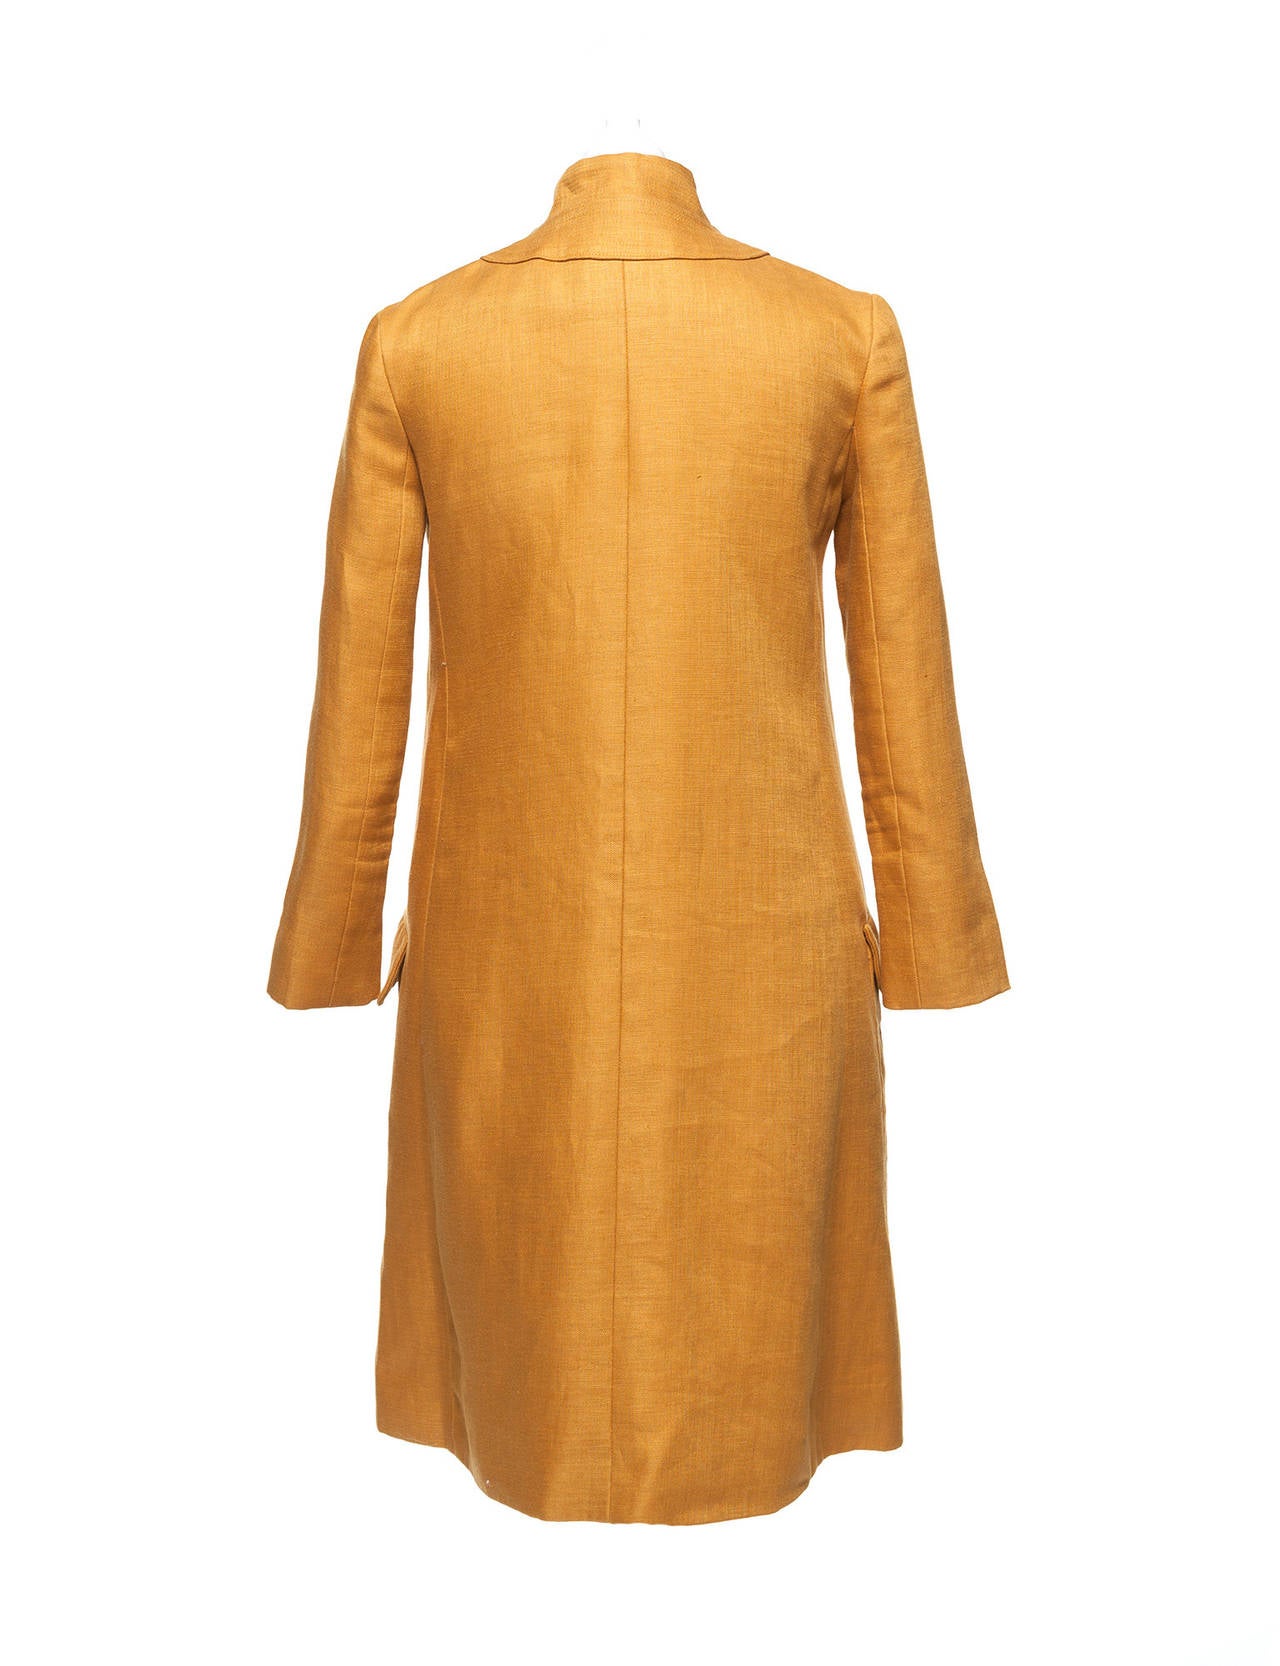 Orange Chloe by Phoebe Philo Mustard linen 60's style coat, Sz. S